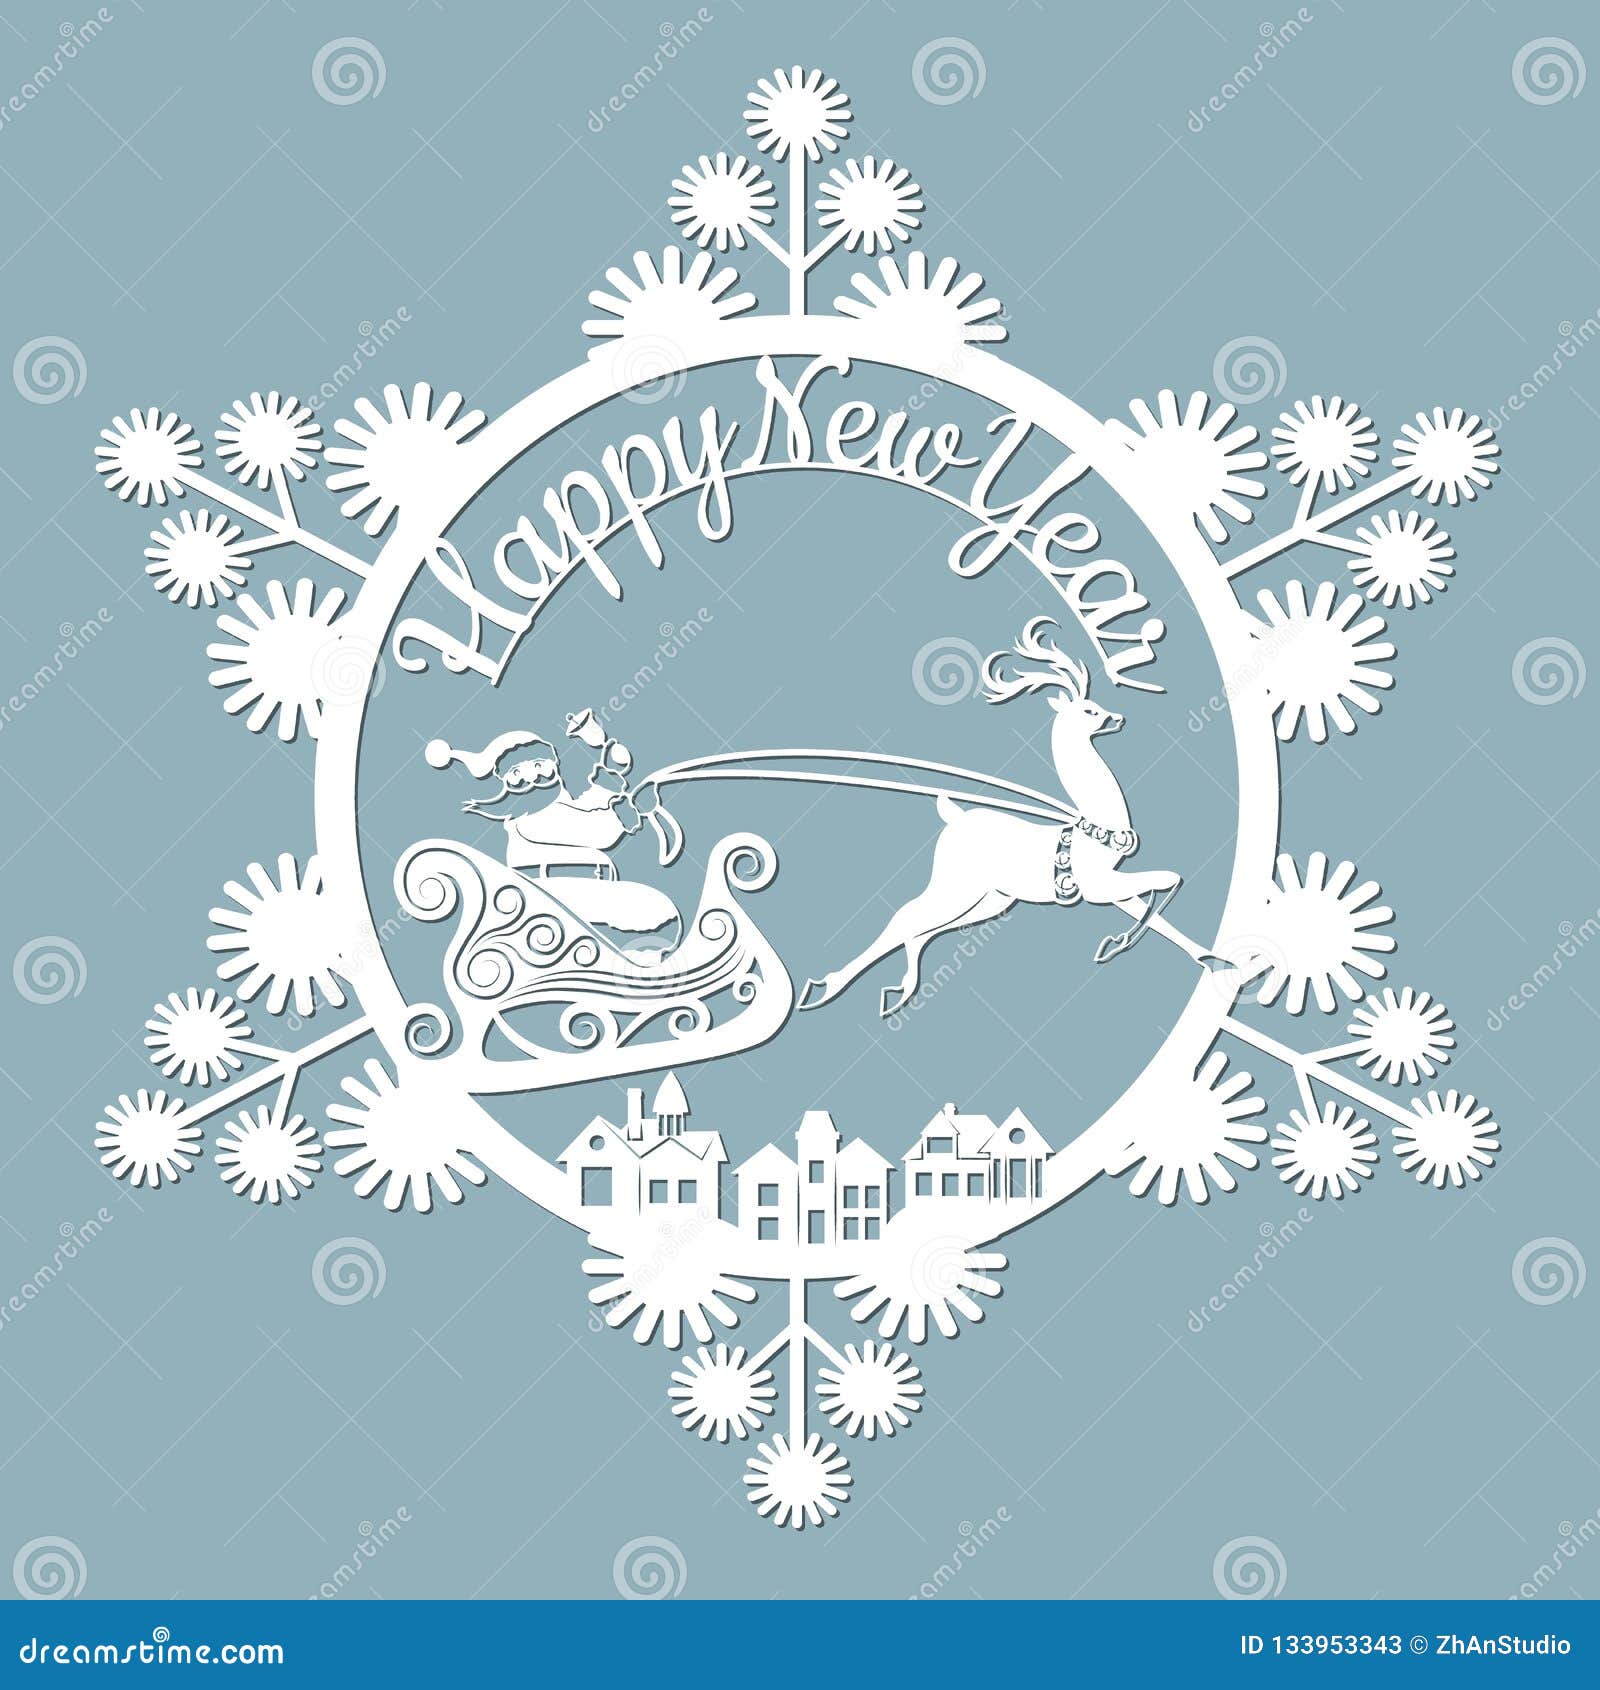 new year, christmas, deer, santa claus, snowflake. for laser cutting, plotter and silkscreen printing